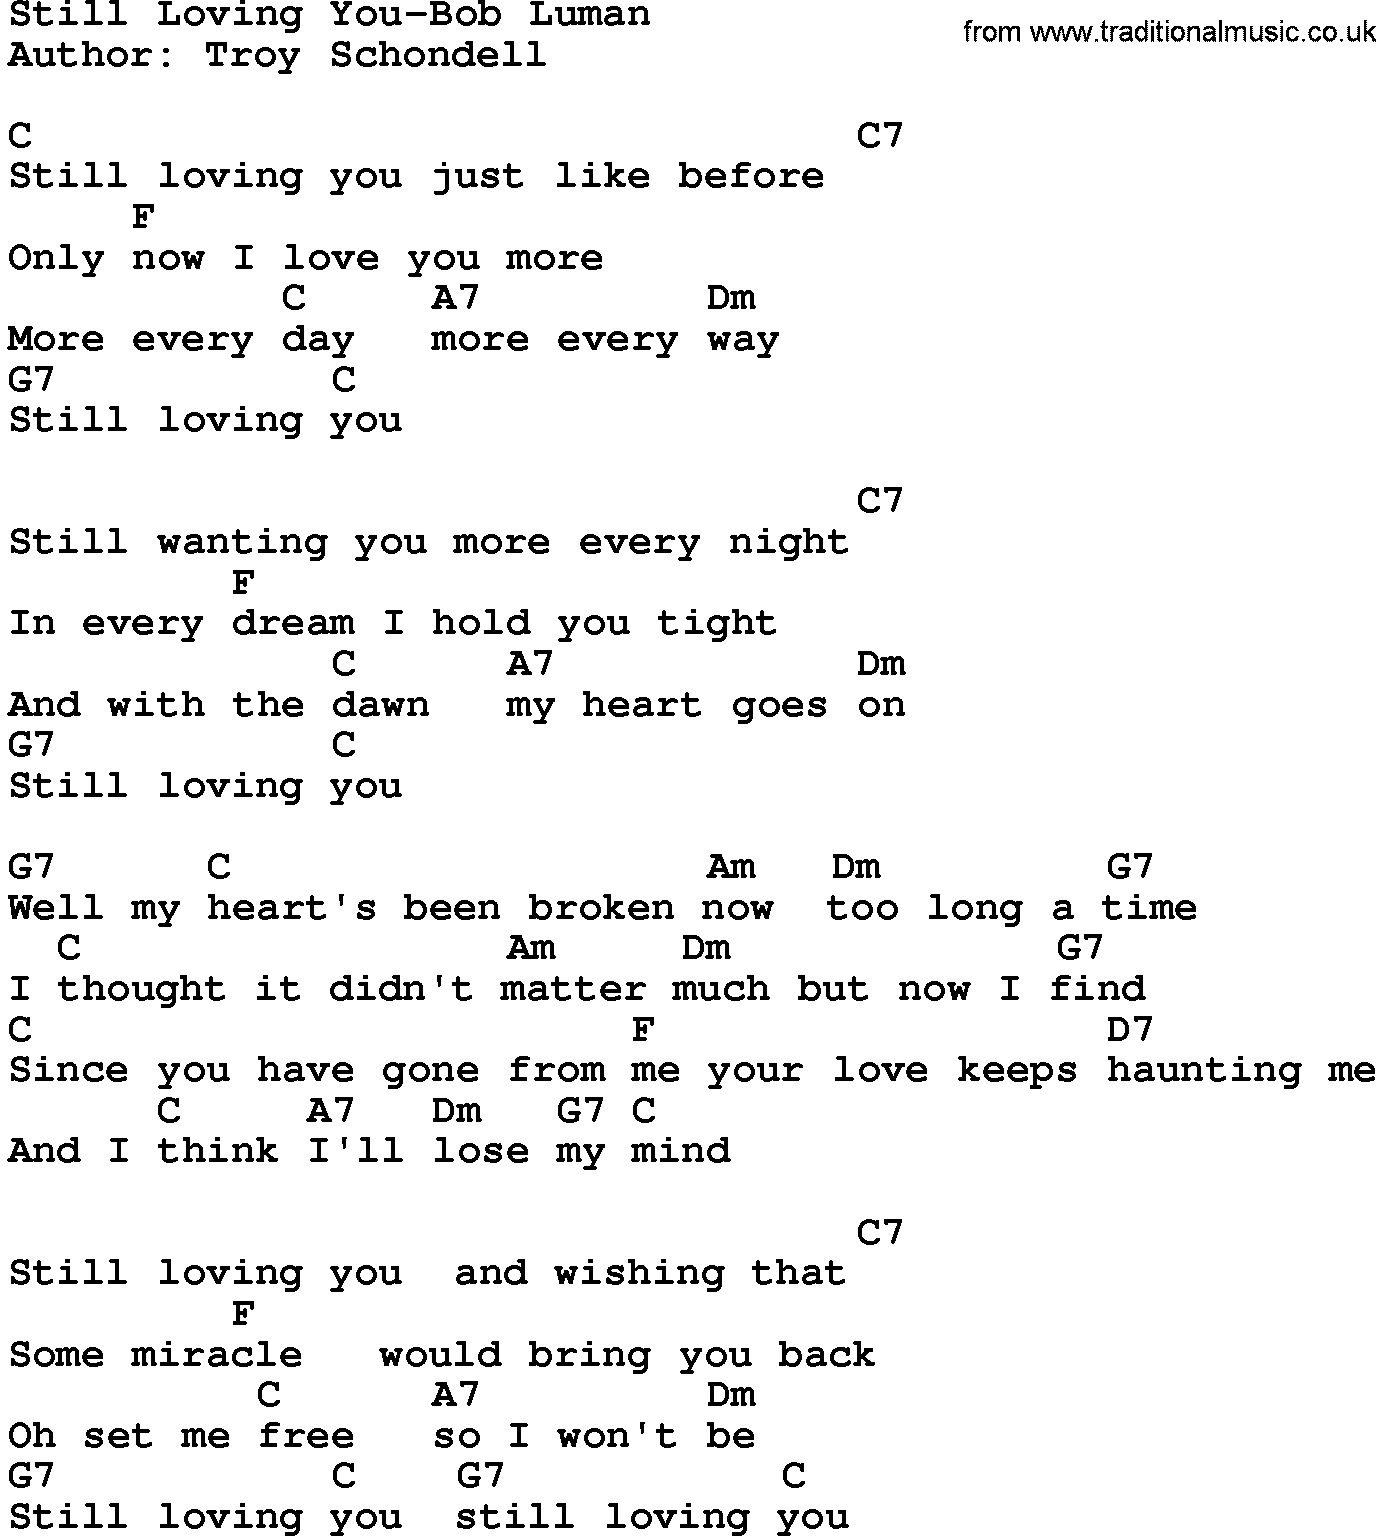 Country music song: Still Loving You-Bob Luman lyrics and chords